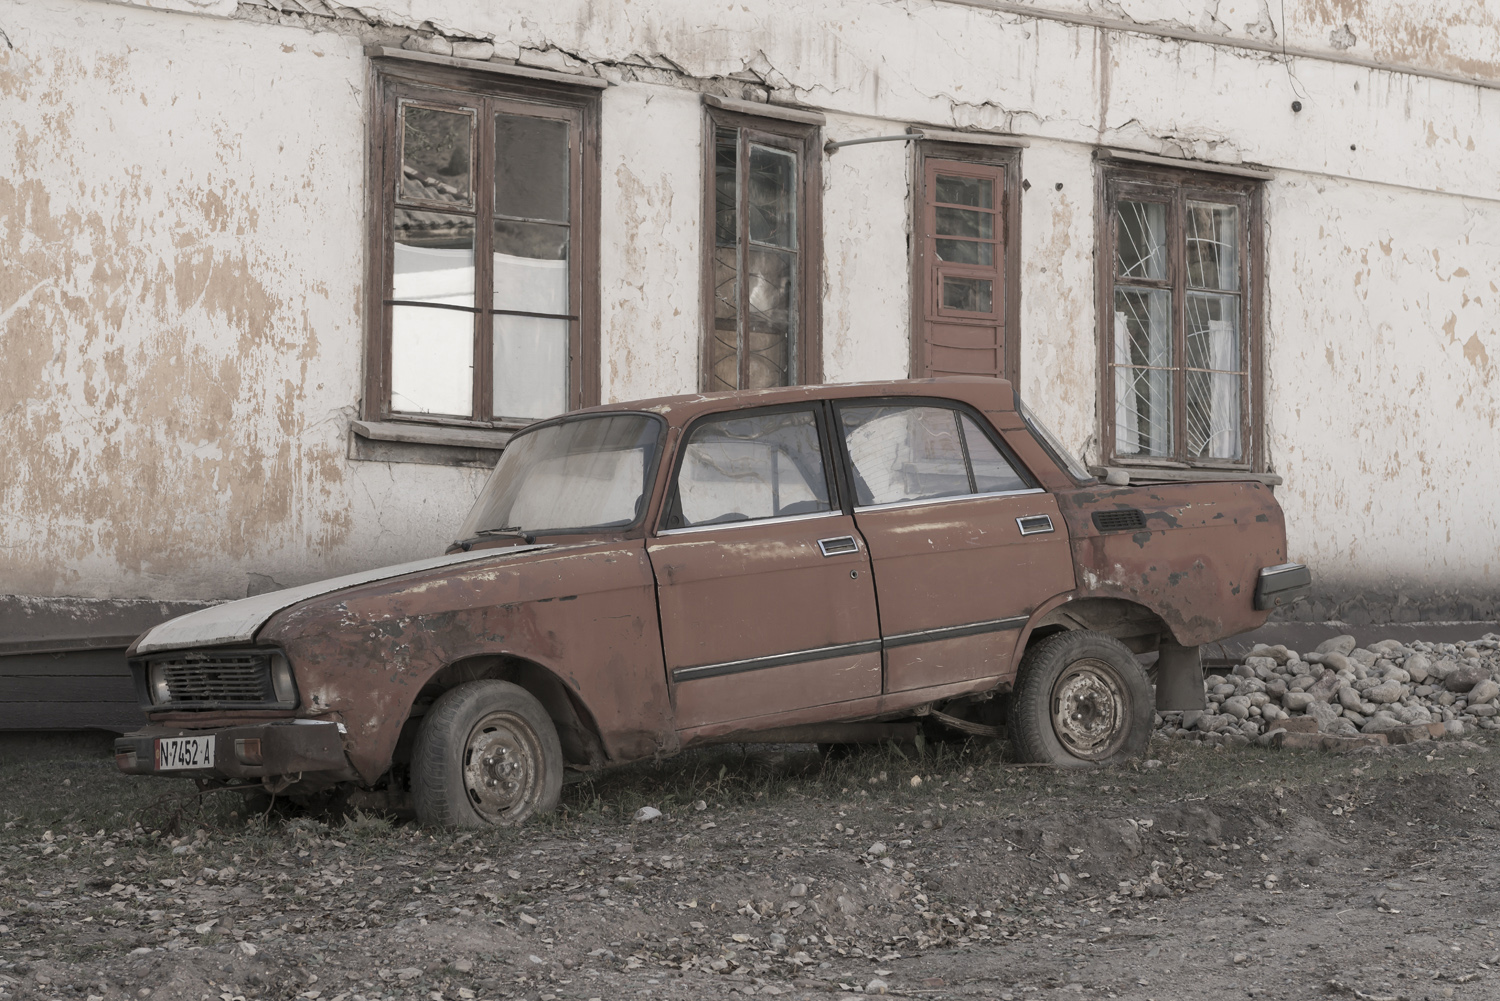 min-kush-soviet-uranium-mining-town-industrial-Russia-Kyrgyzstan-ruins-soviet-sign-jo-kearney-photos-video-photography.lada.abandonment.jpg